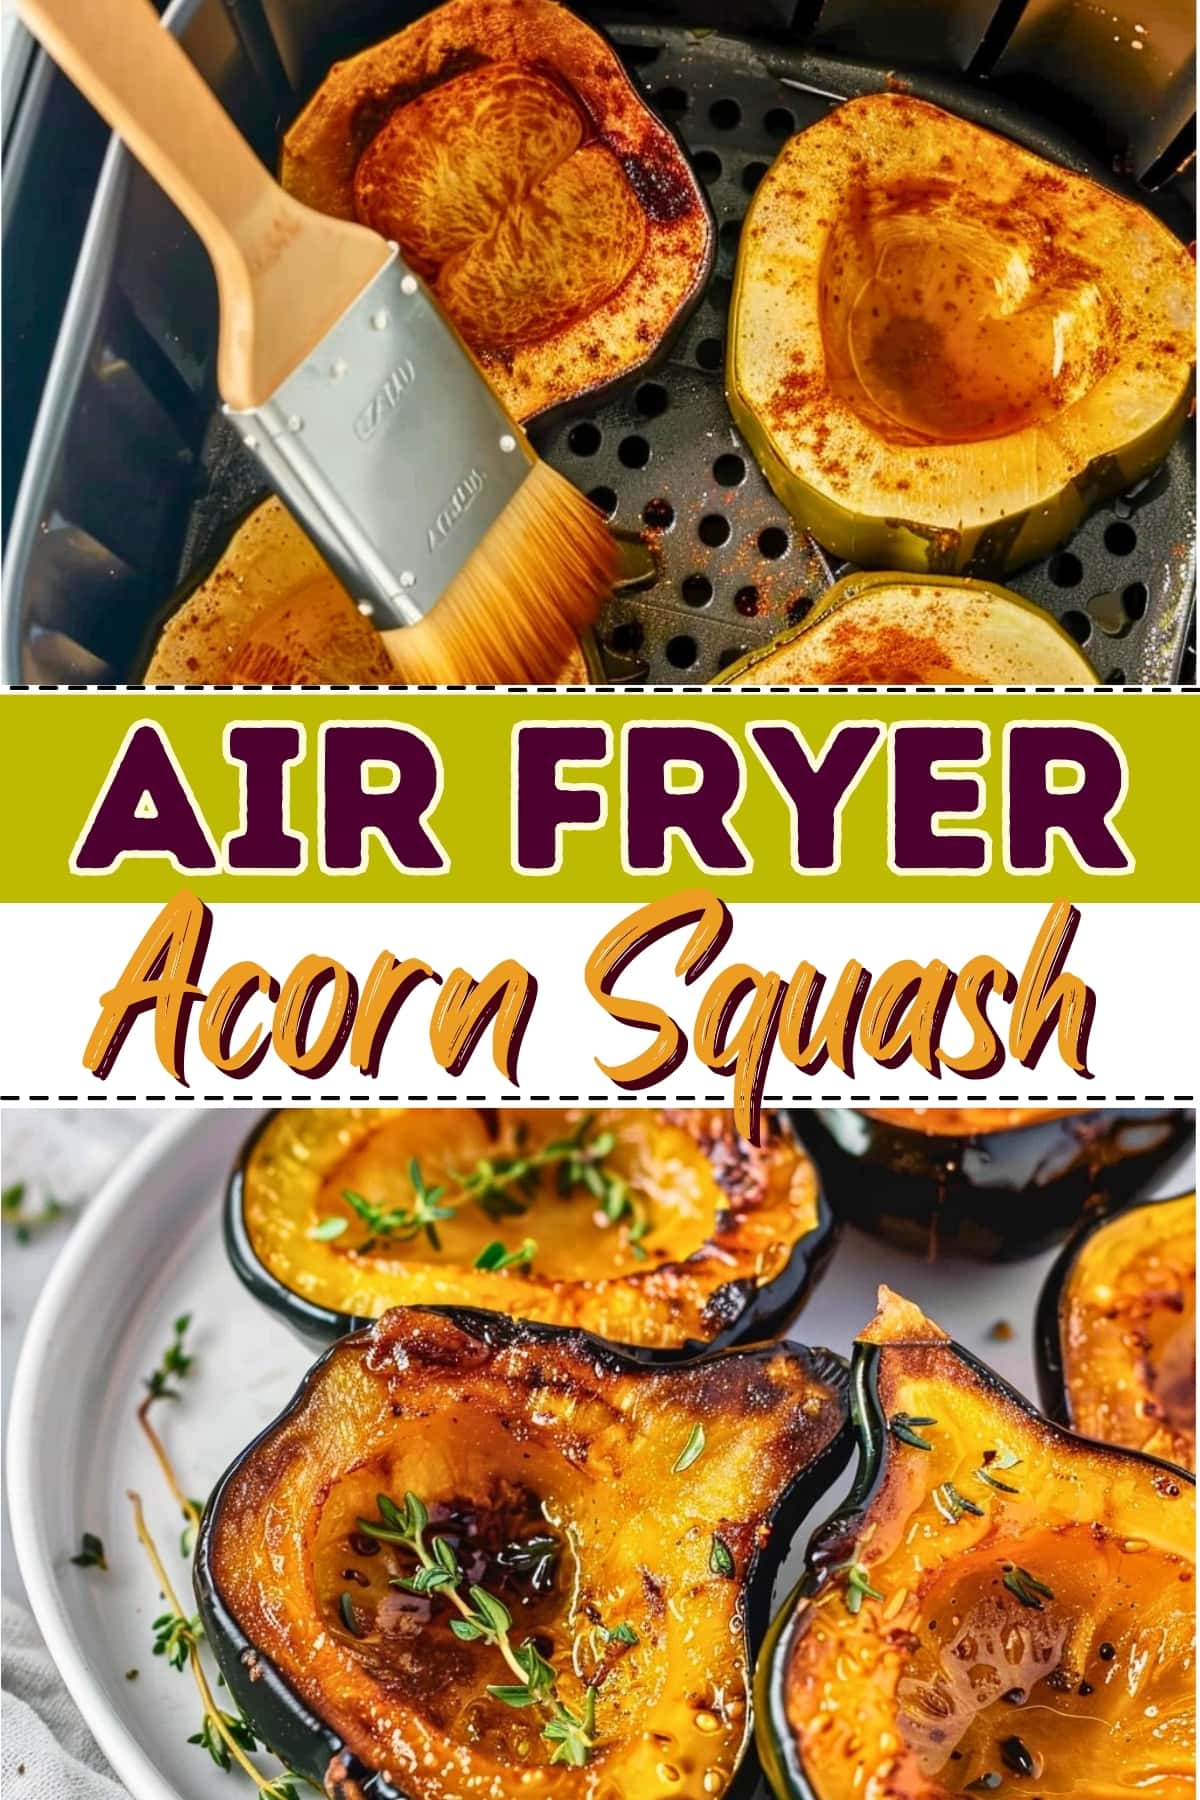 Air fryer acorn squash.